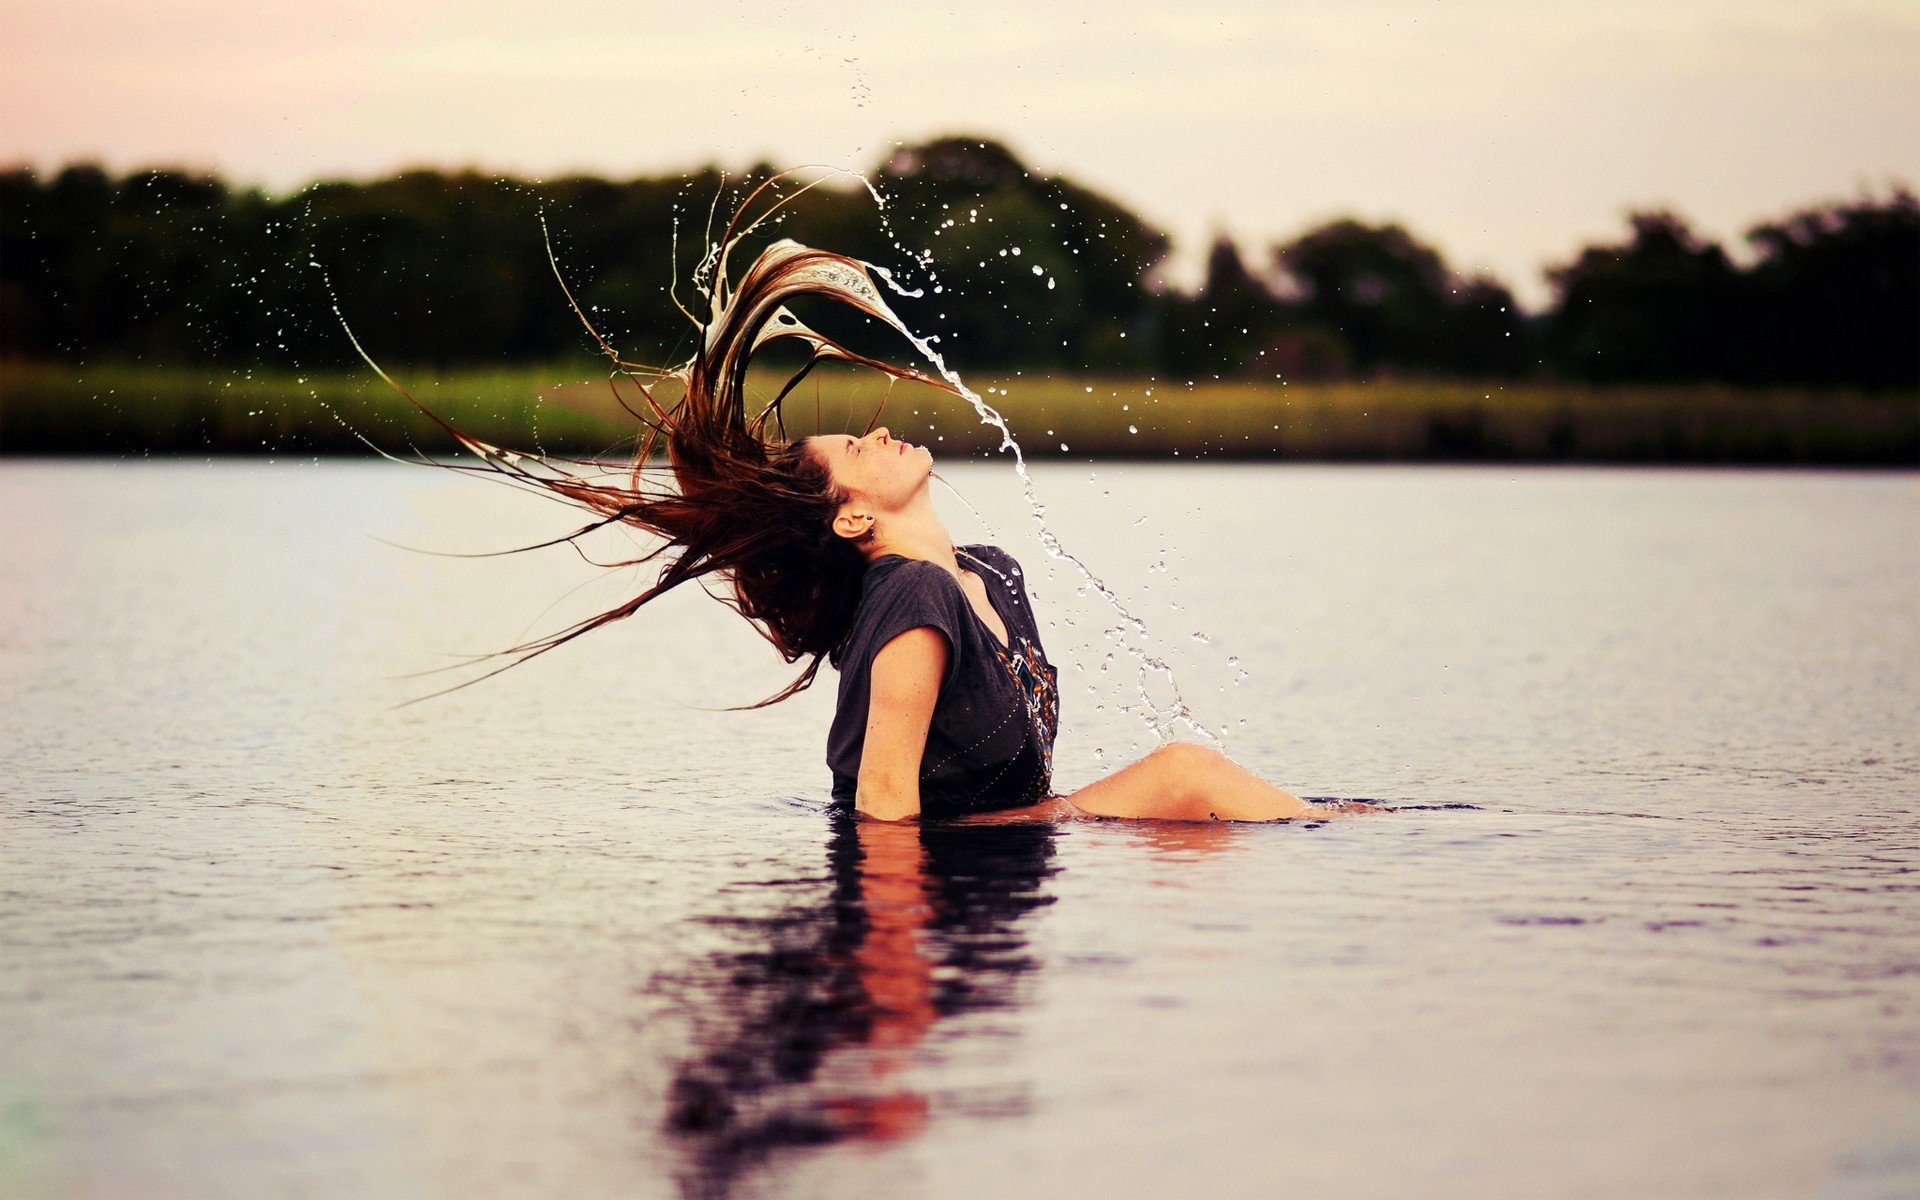 Лове на лету. Фотосессия на озере. Фотосессия в воде. Девушки на озере. Девушка с длинными волосами в воде.